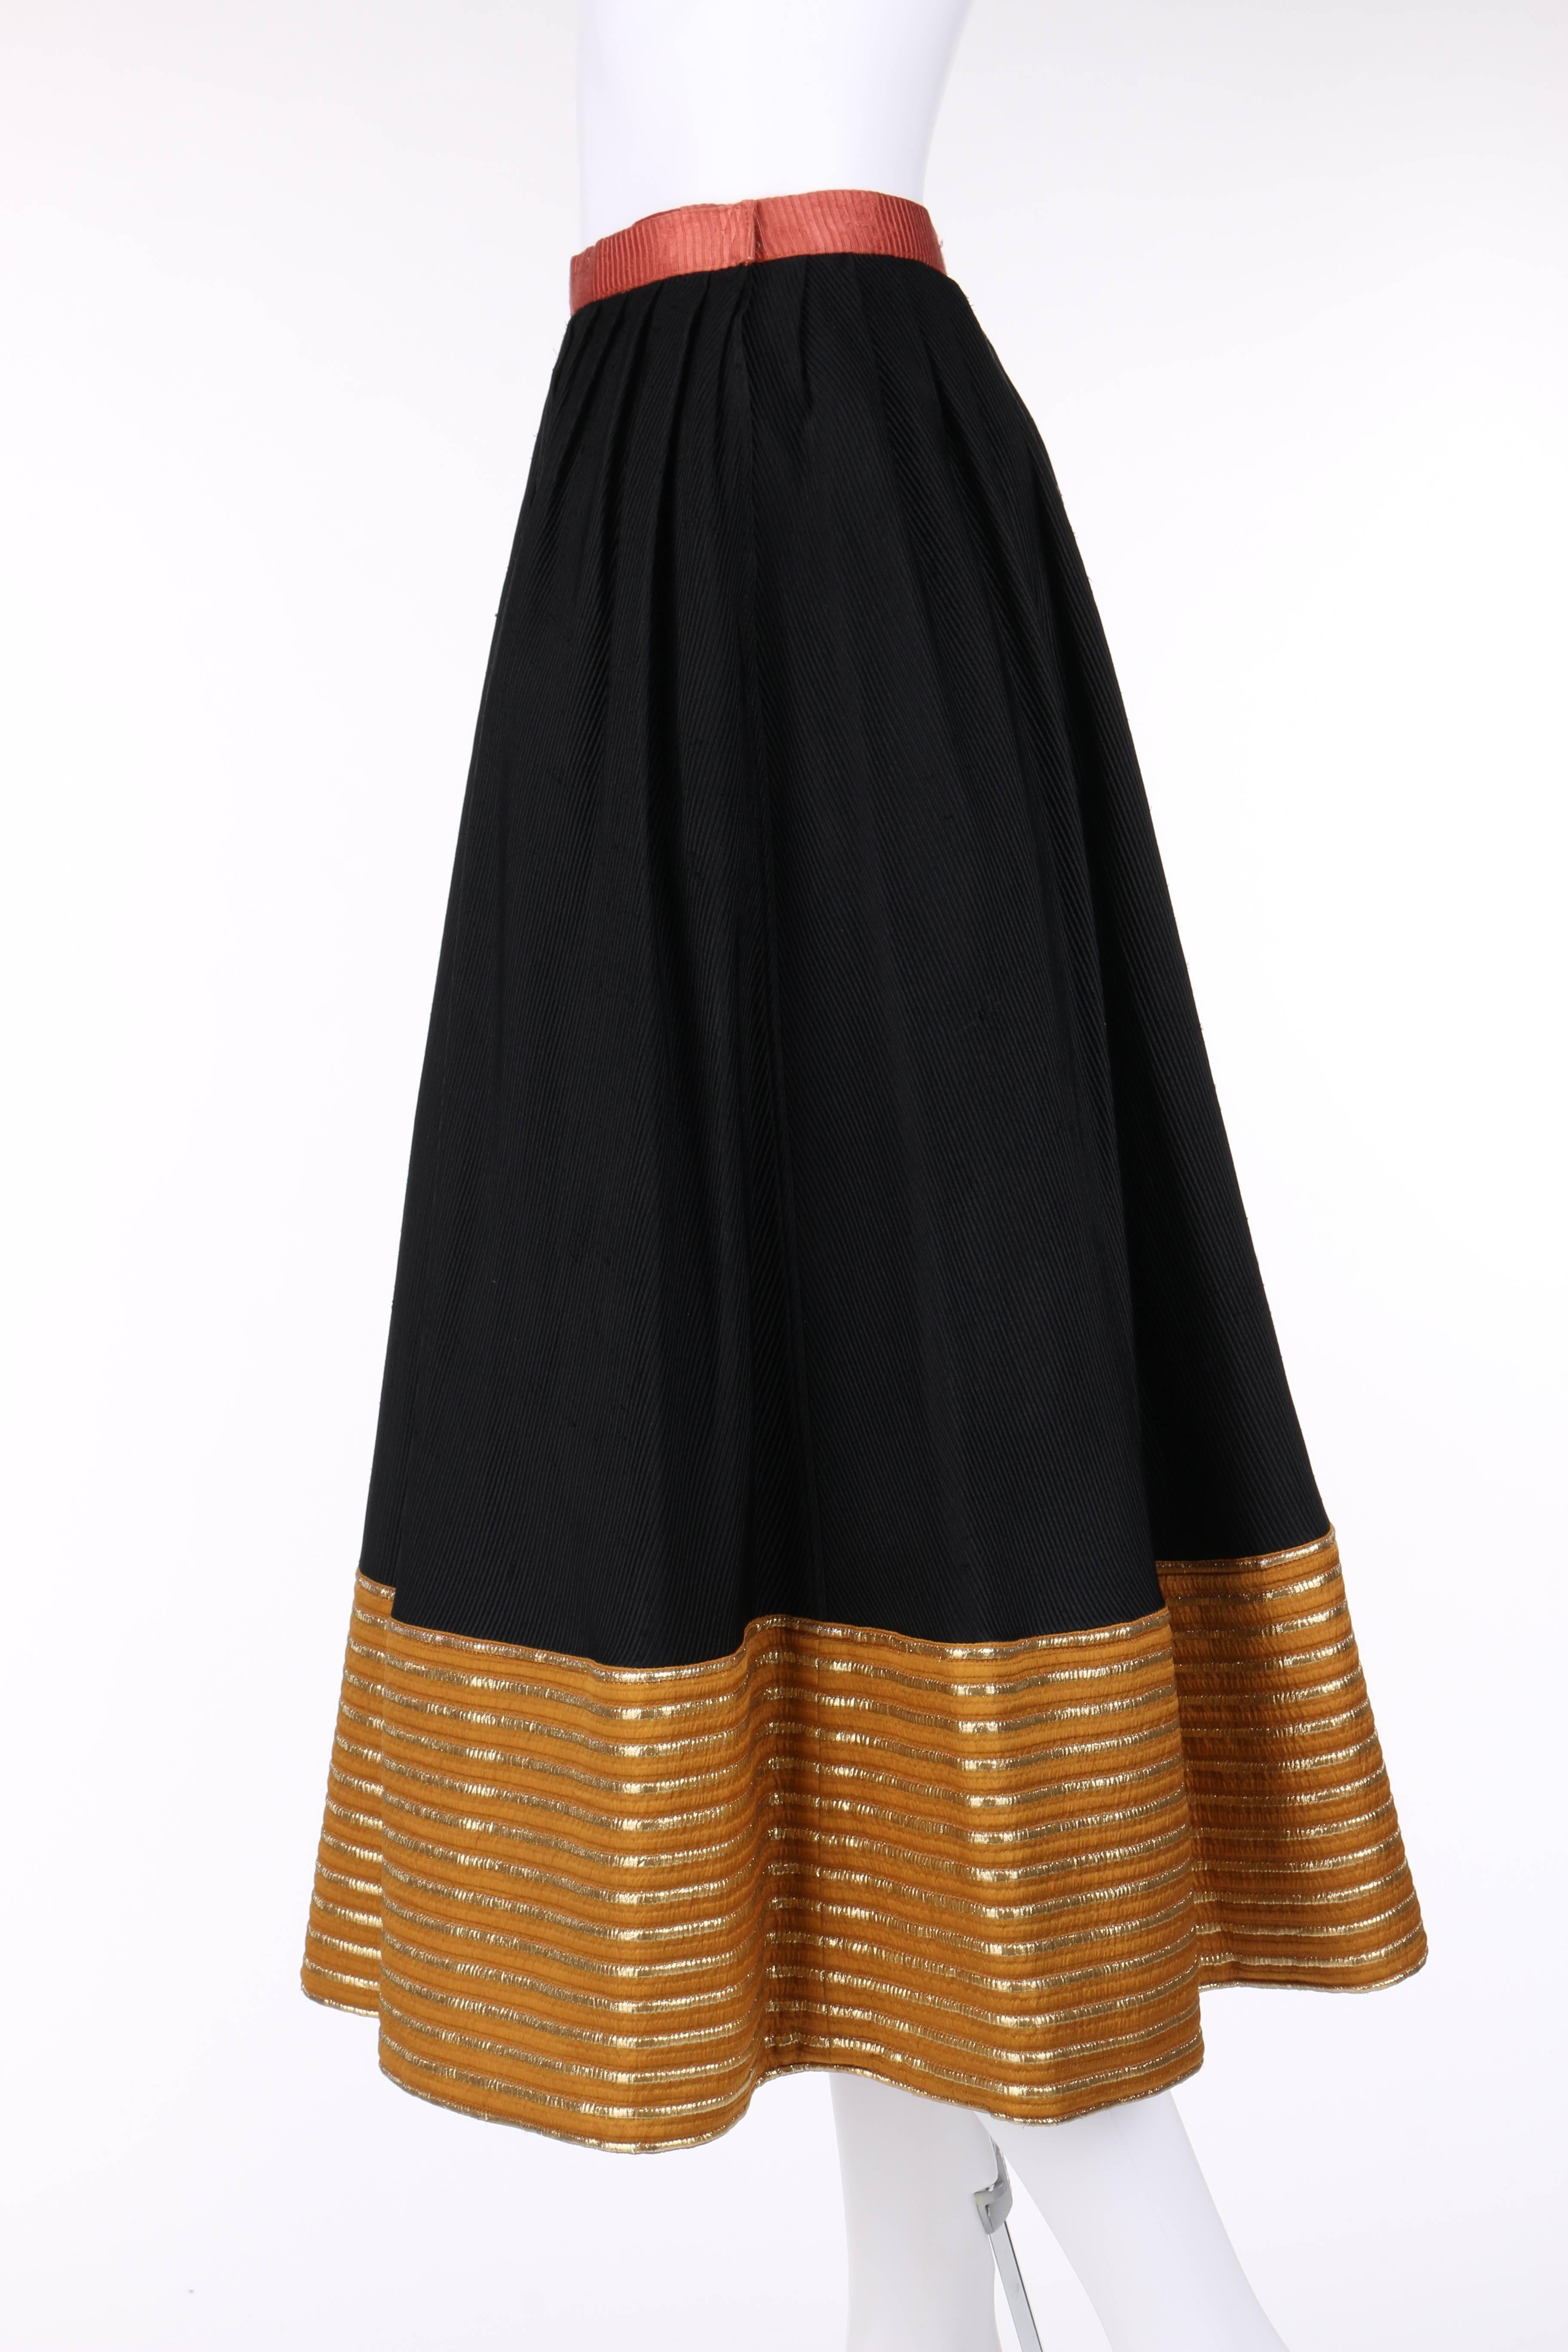 GEOFFREY BEENE c.1970's Black Silk Faille Metallic Gold Detail Skirt 1